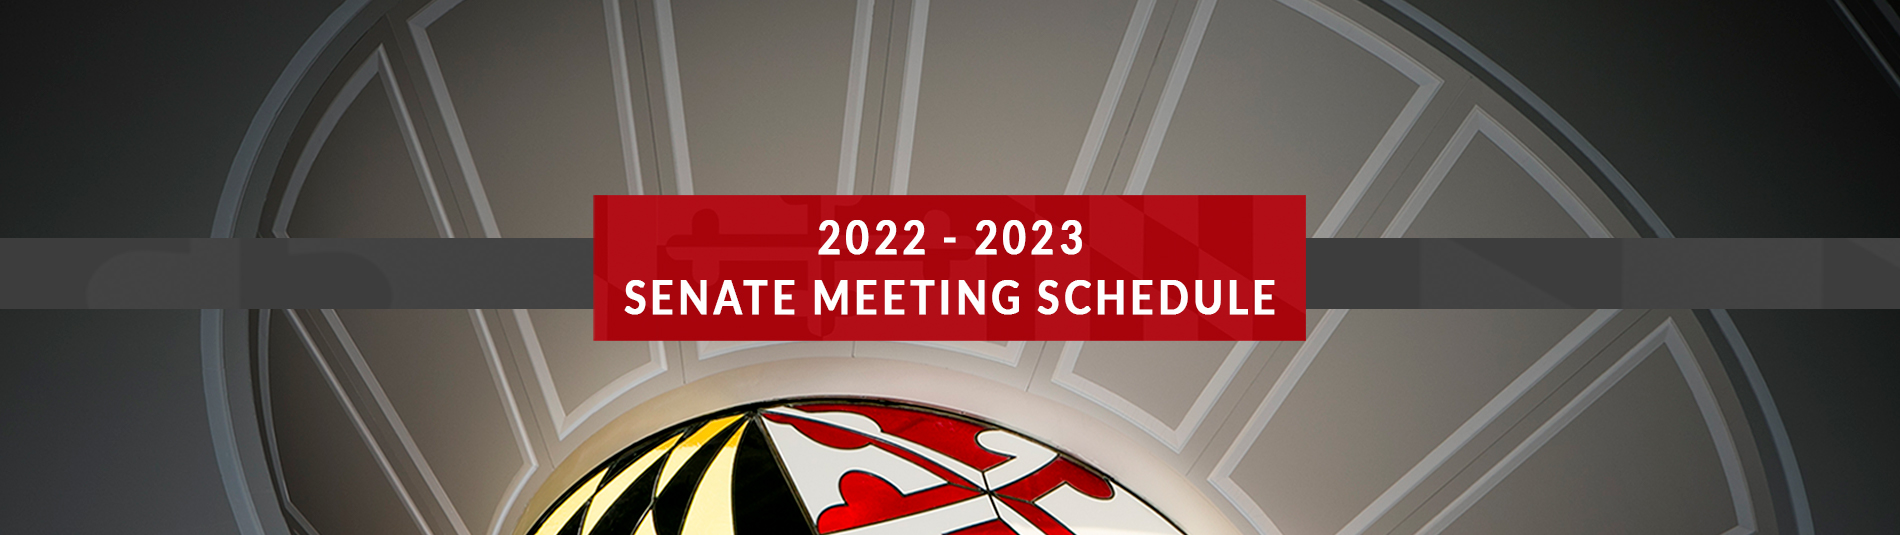 2022-2023 Senate Meeting Schedule